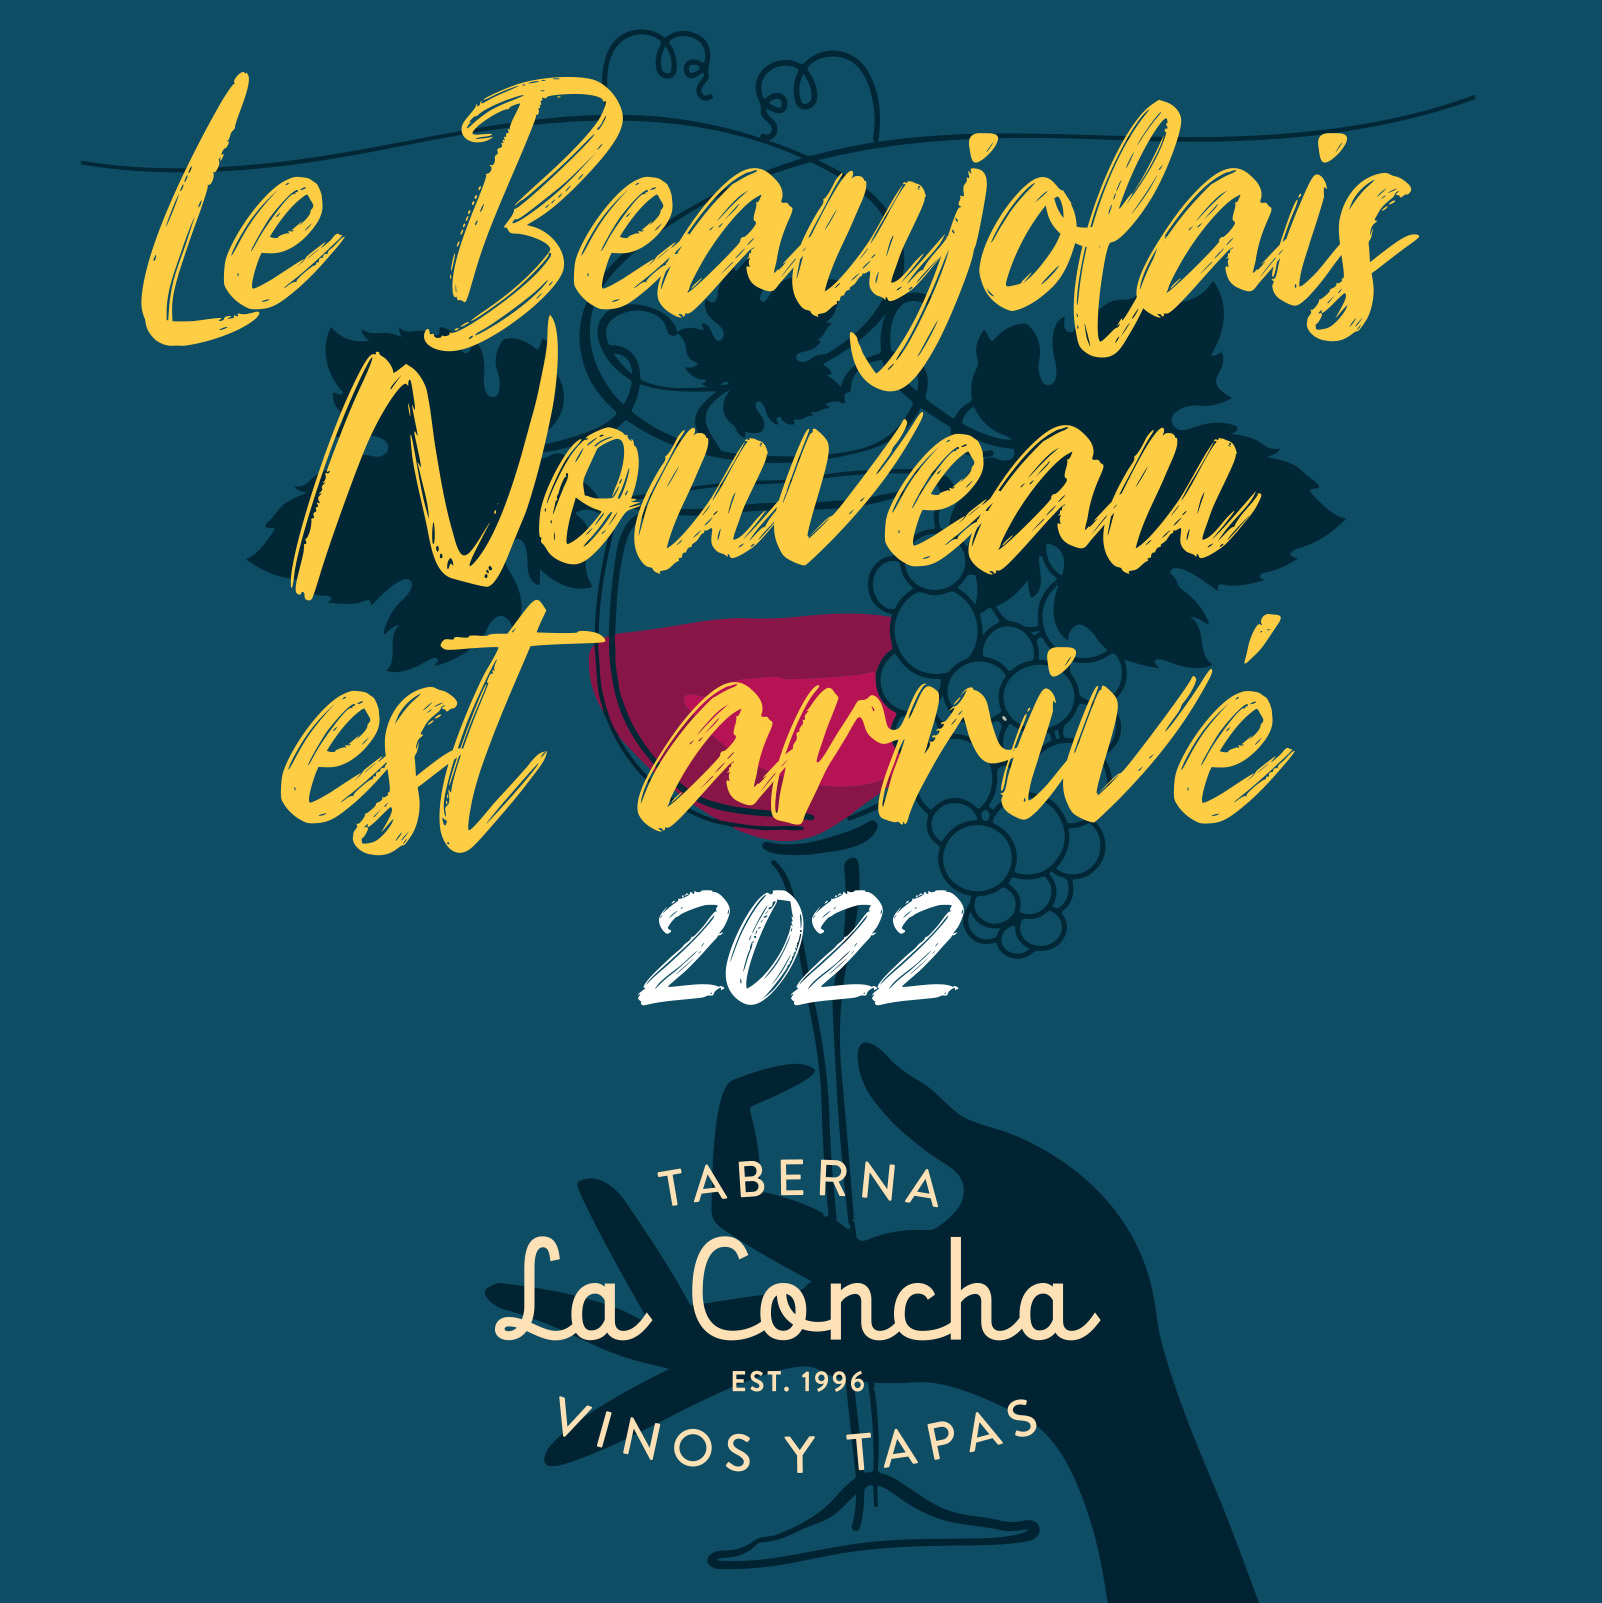 Beaujolais Nouveau 2022